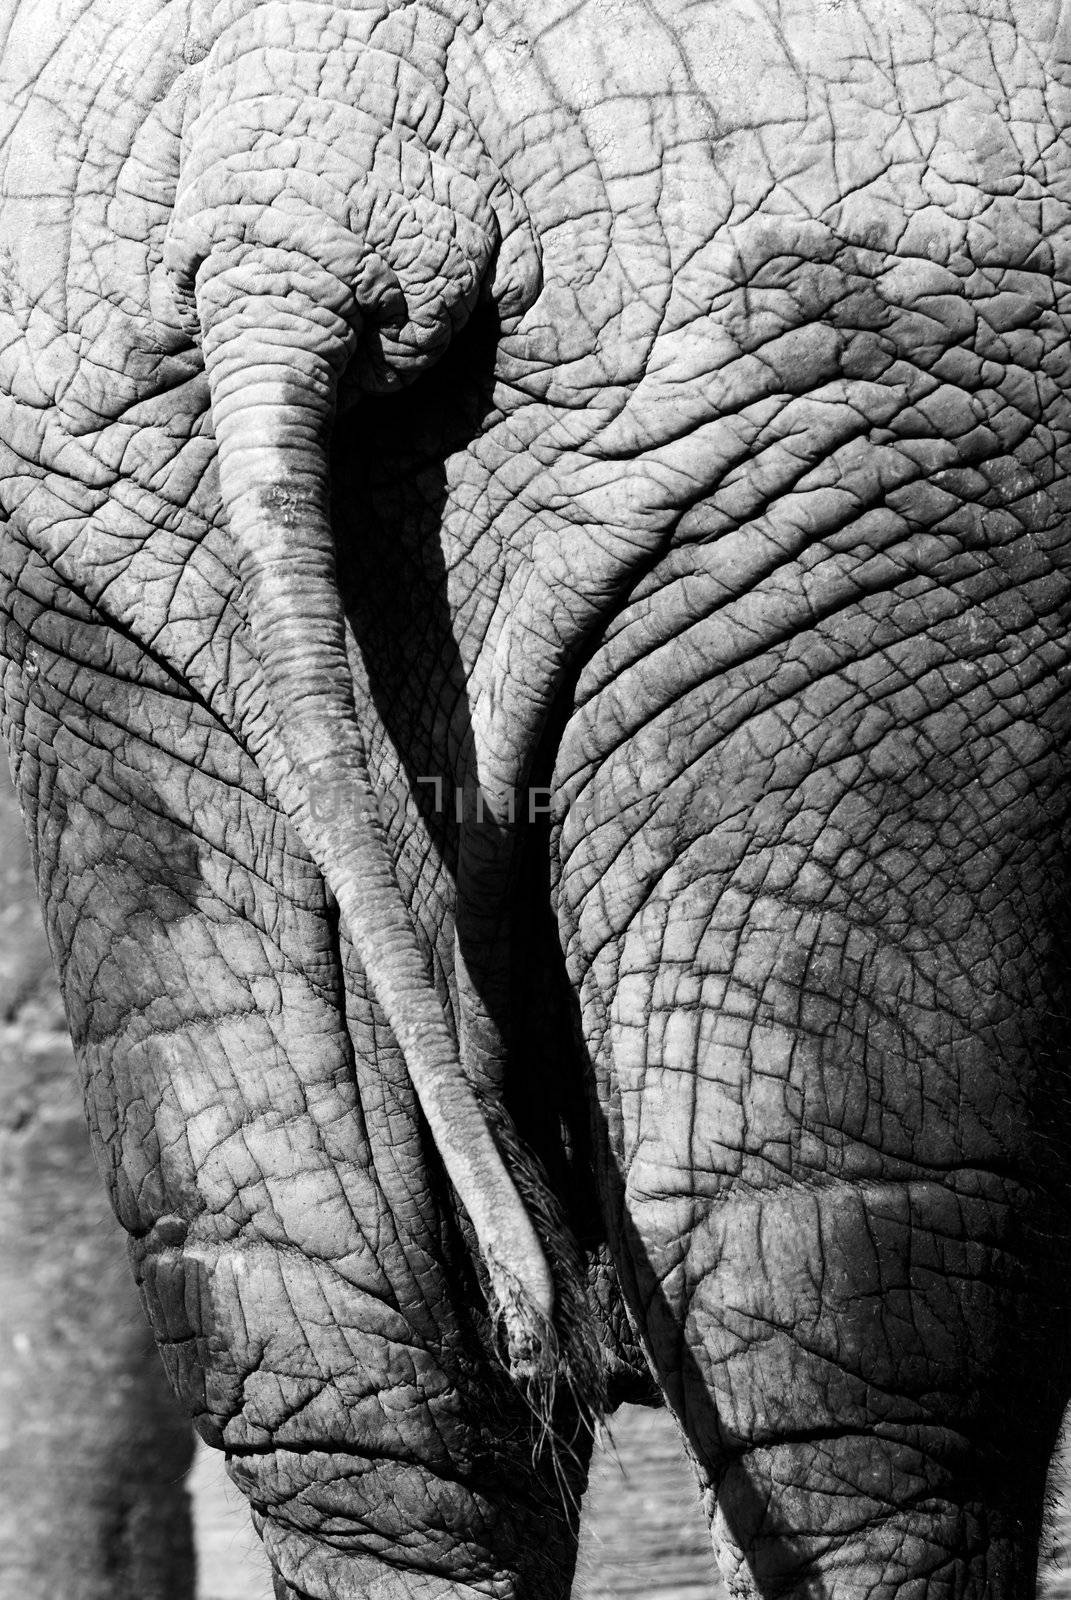 Elephant back detail skin black and white grey by dgmata